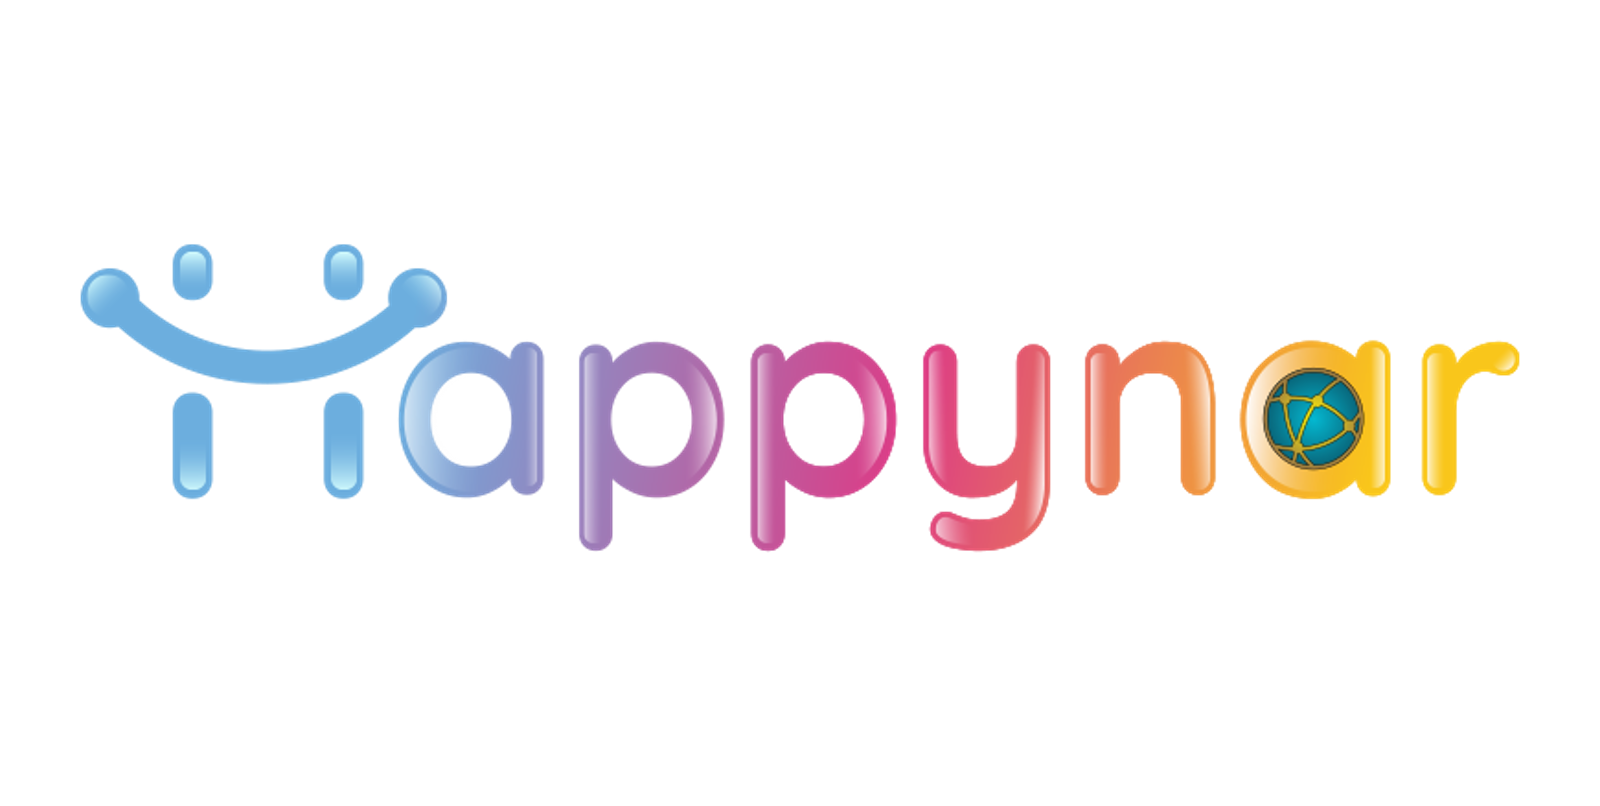 Happynar logo.png